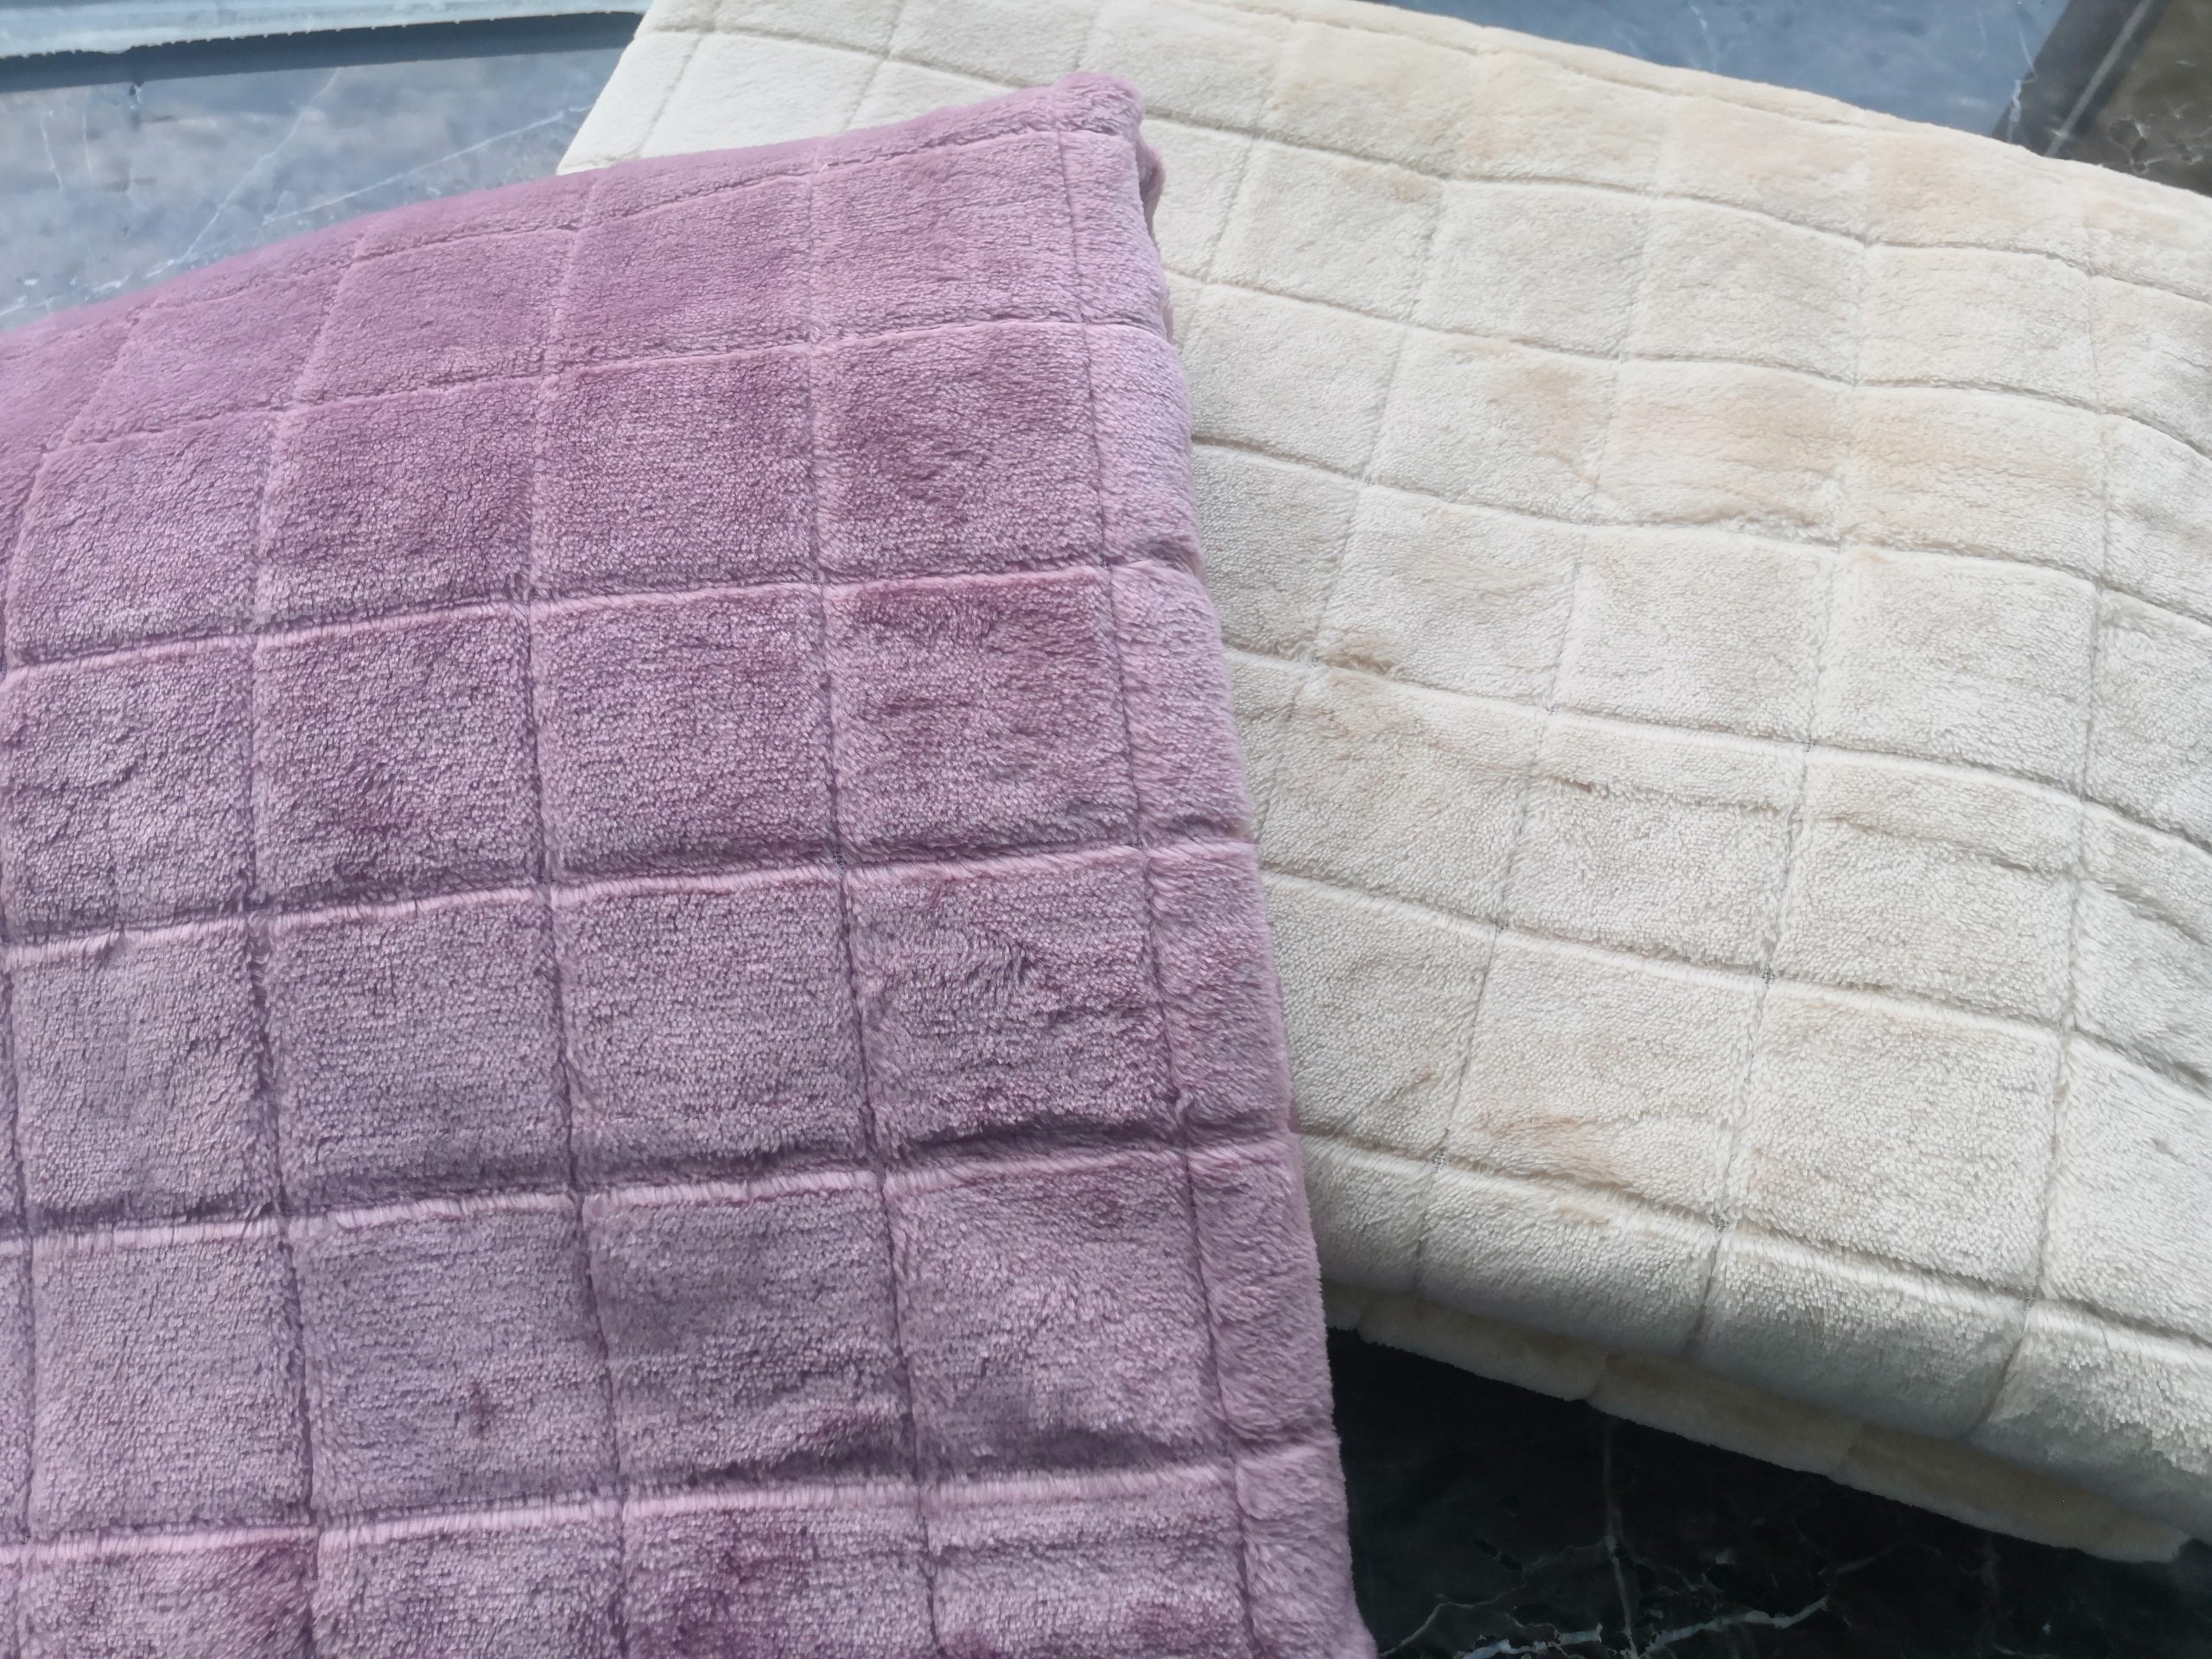 Single Blanket-square jacquard flannel throw/blanket